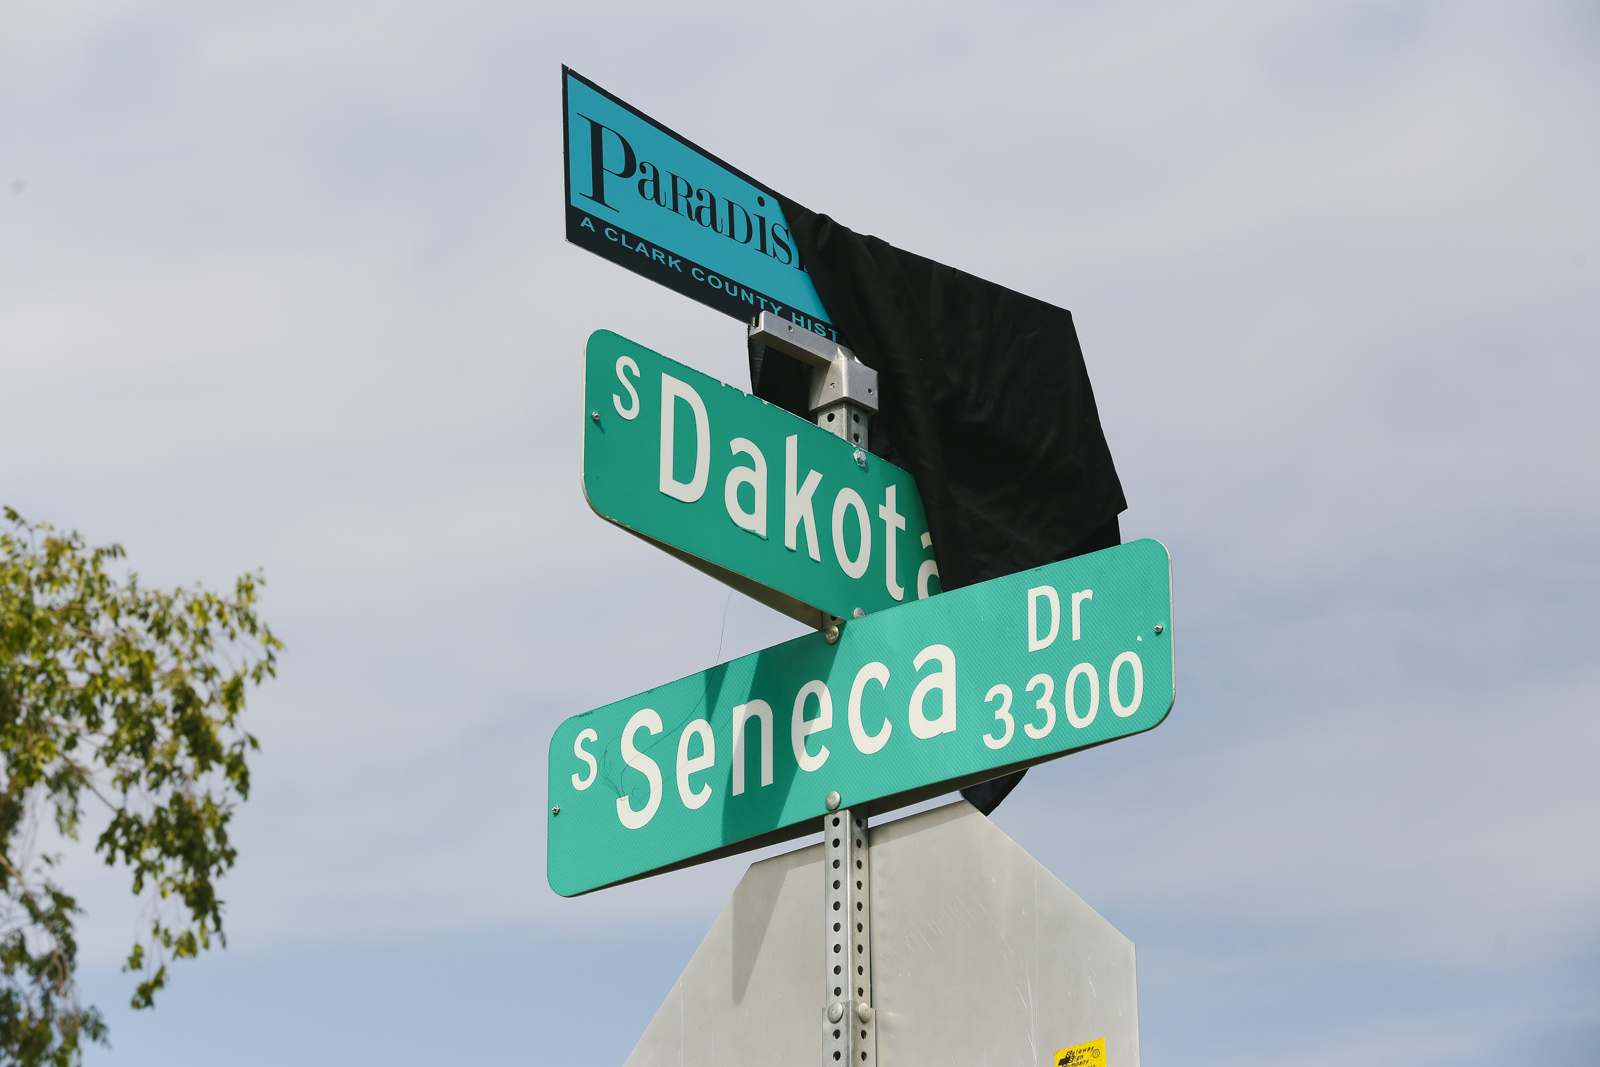 Paradsie Drive Street Sign 